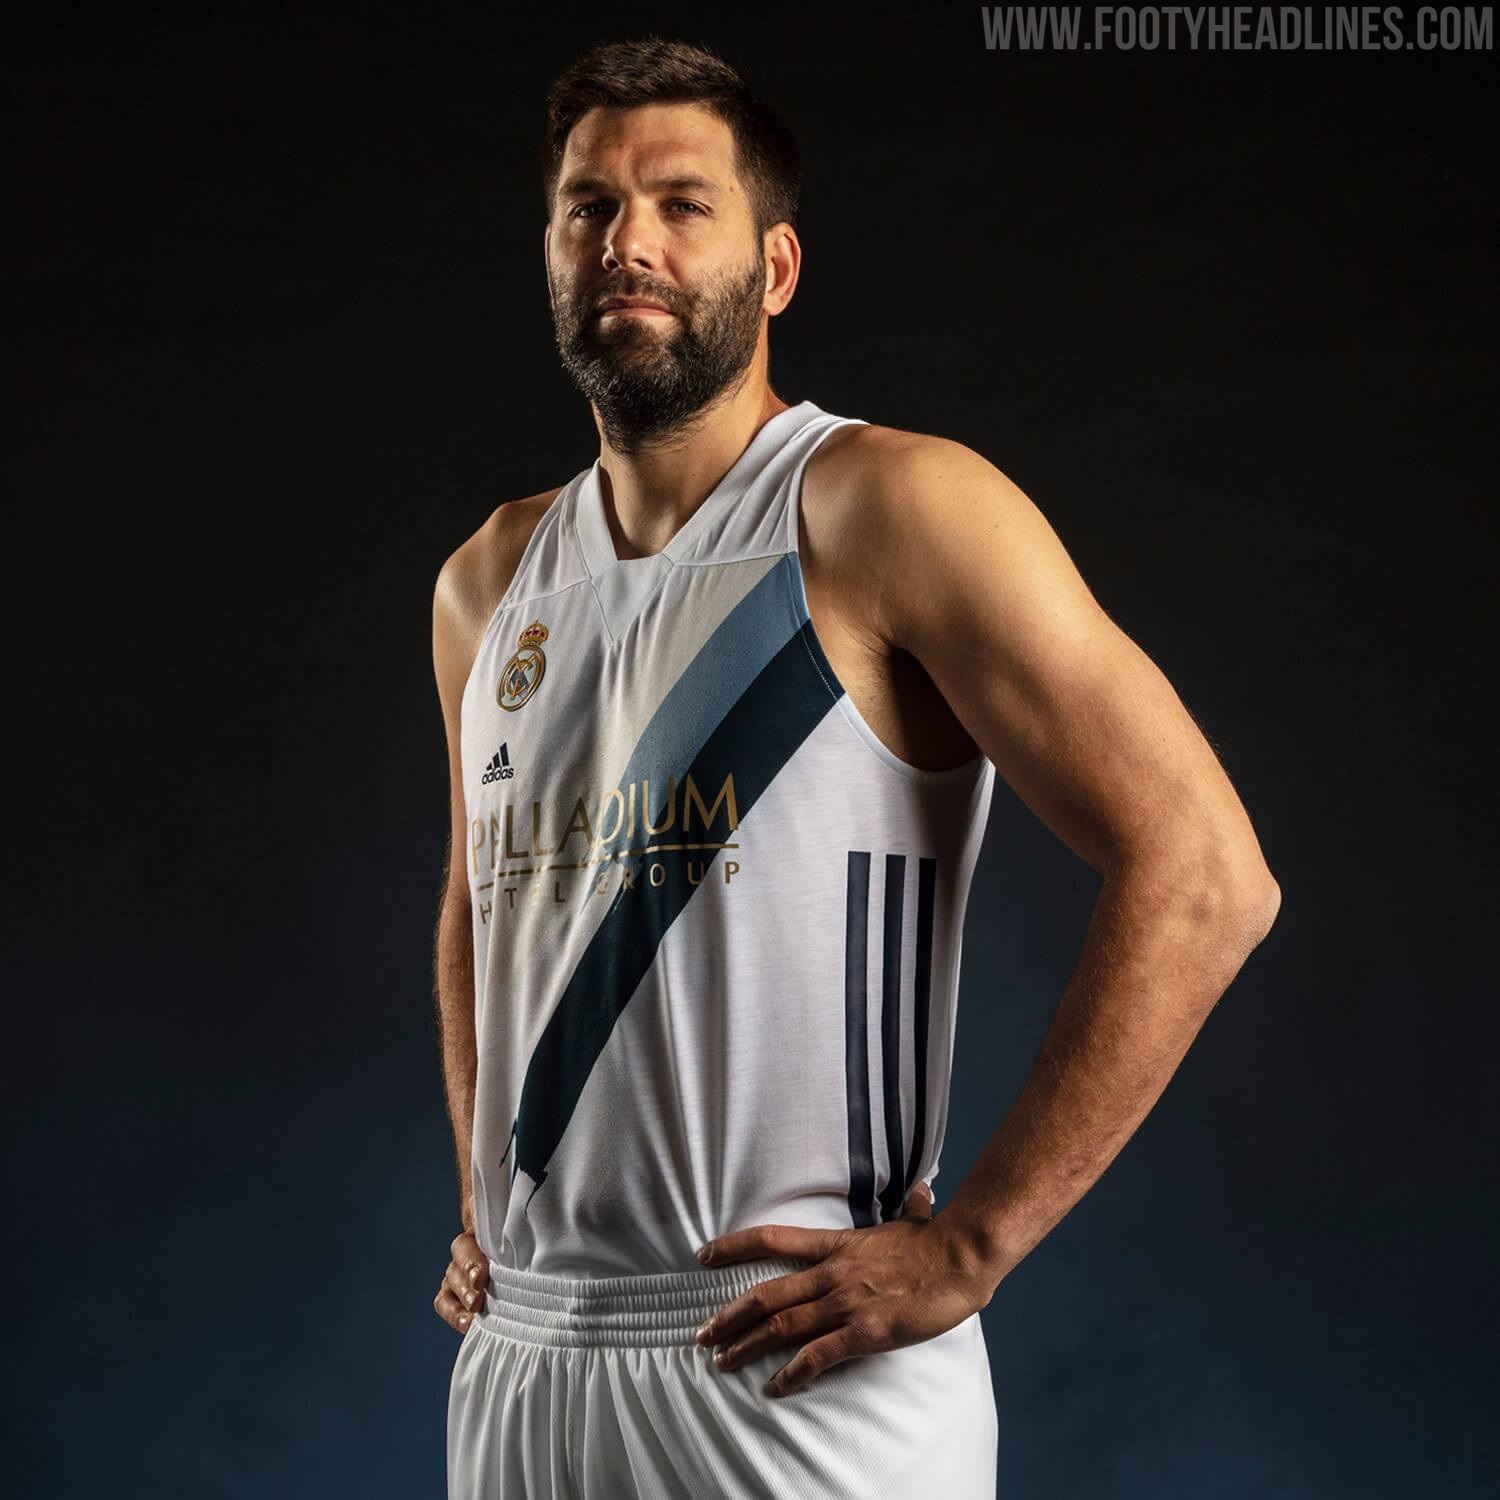 Adidas x Real Madrid Star Wars Jerseys Released - Basketball - Footy Headlines